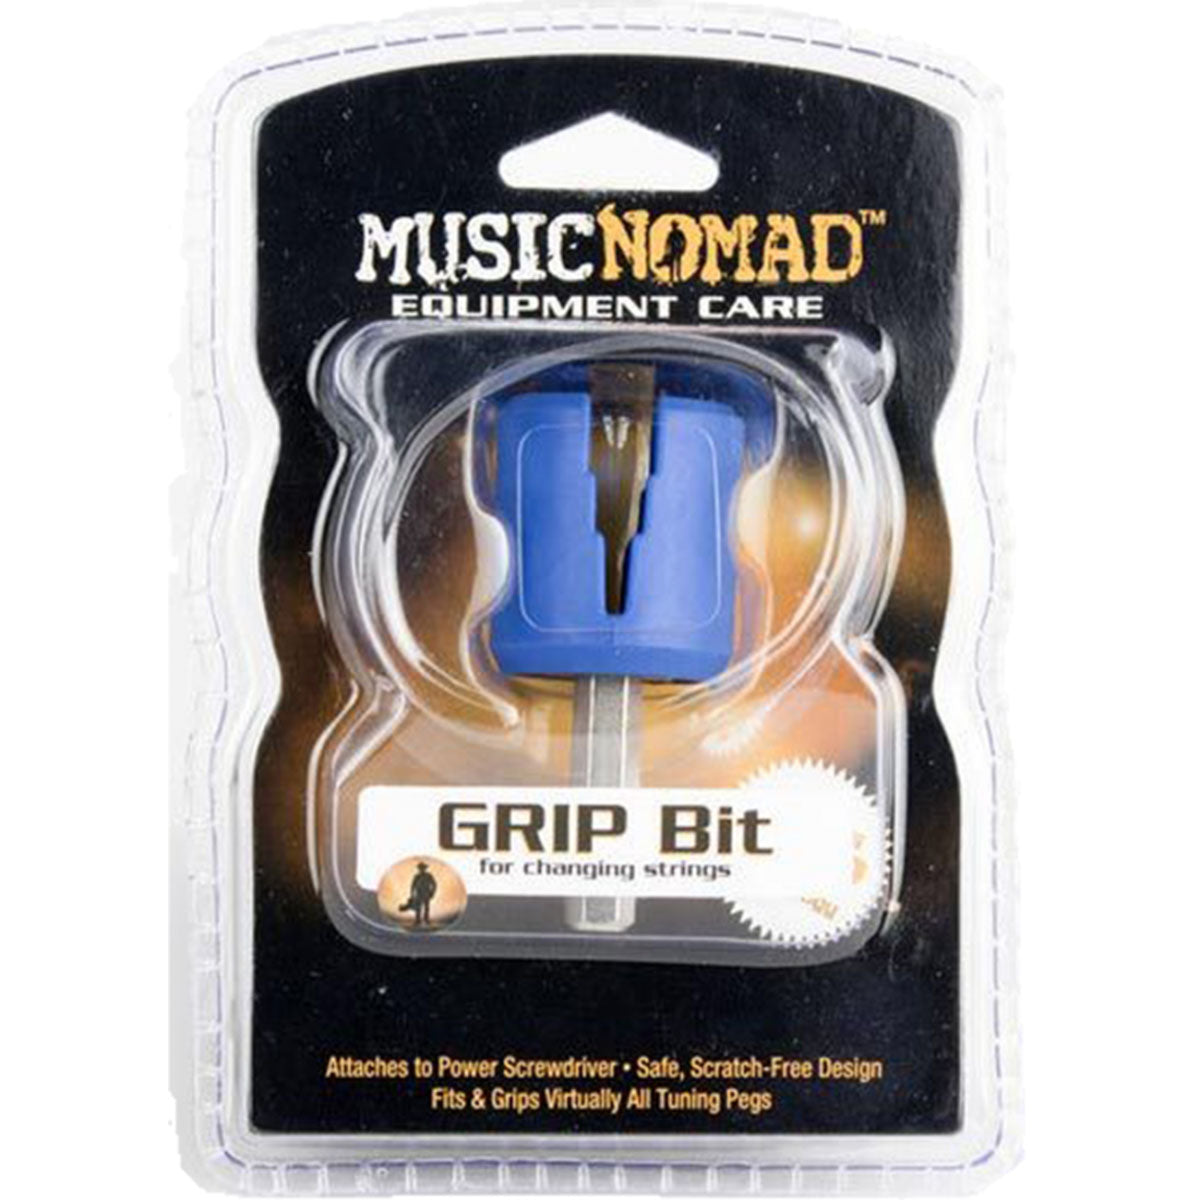 Music Nomad MN220 Grip Bit Peg Winder Attachment